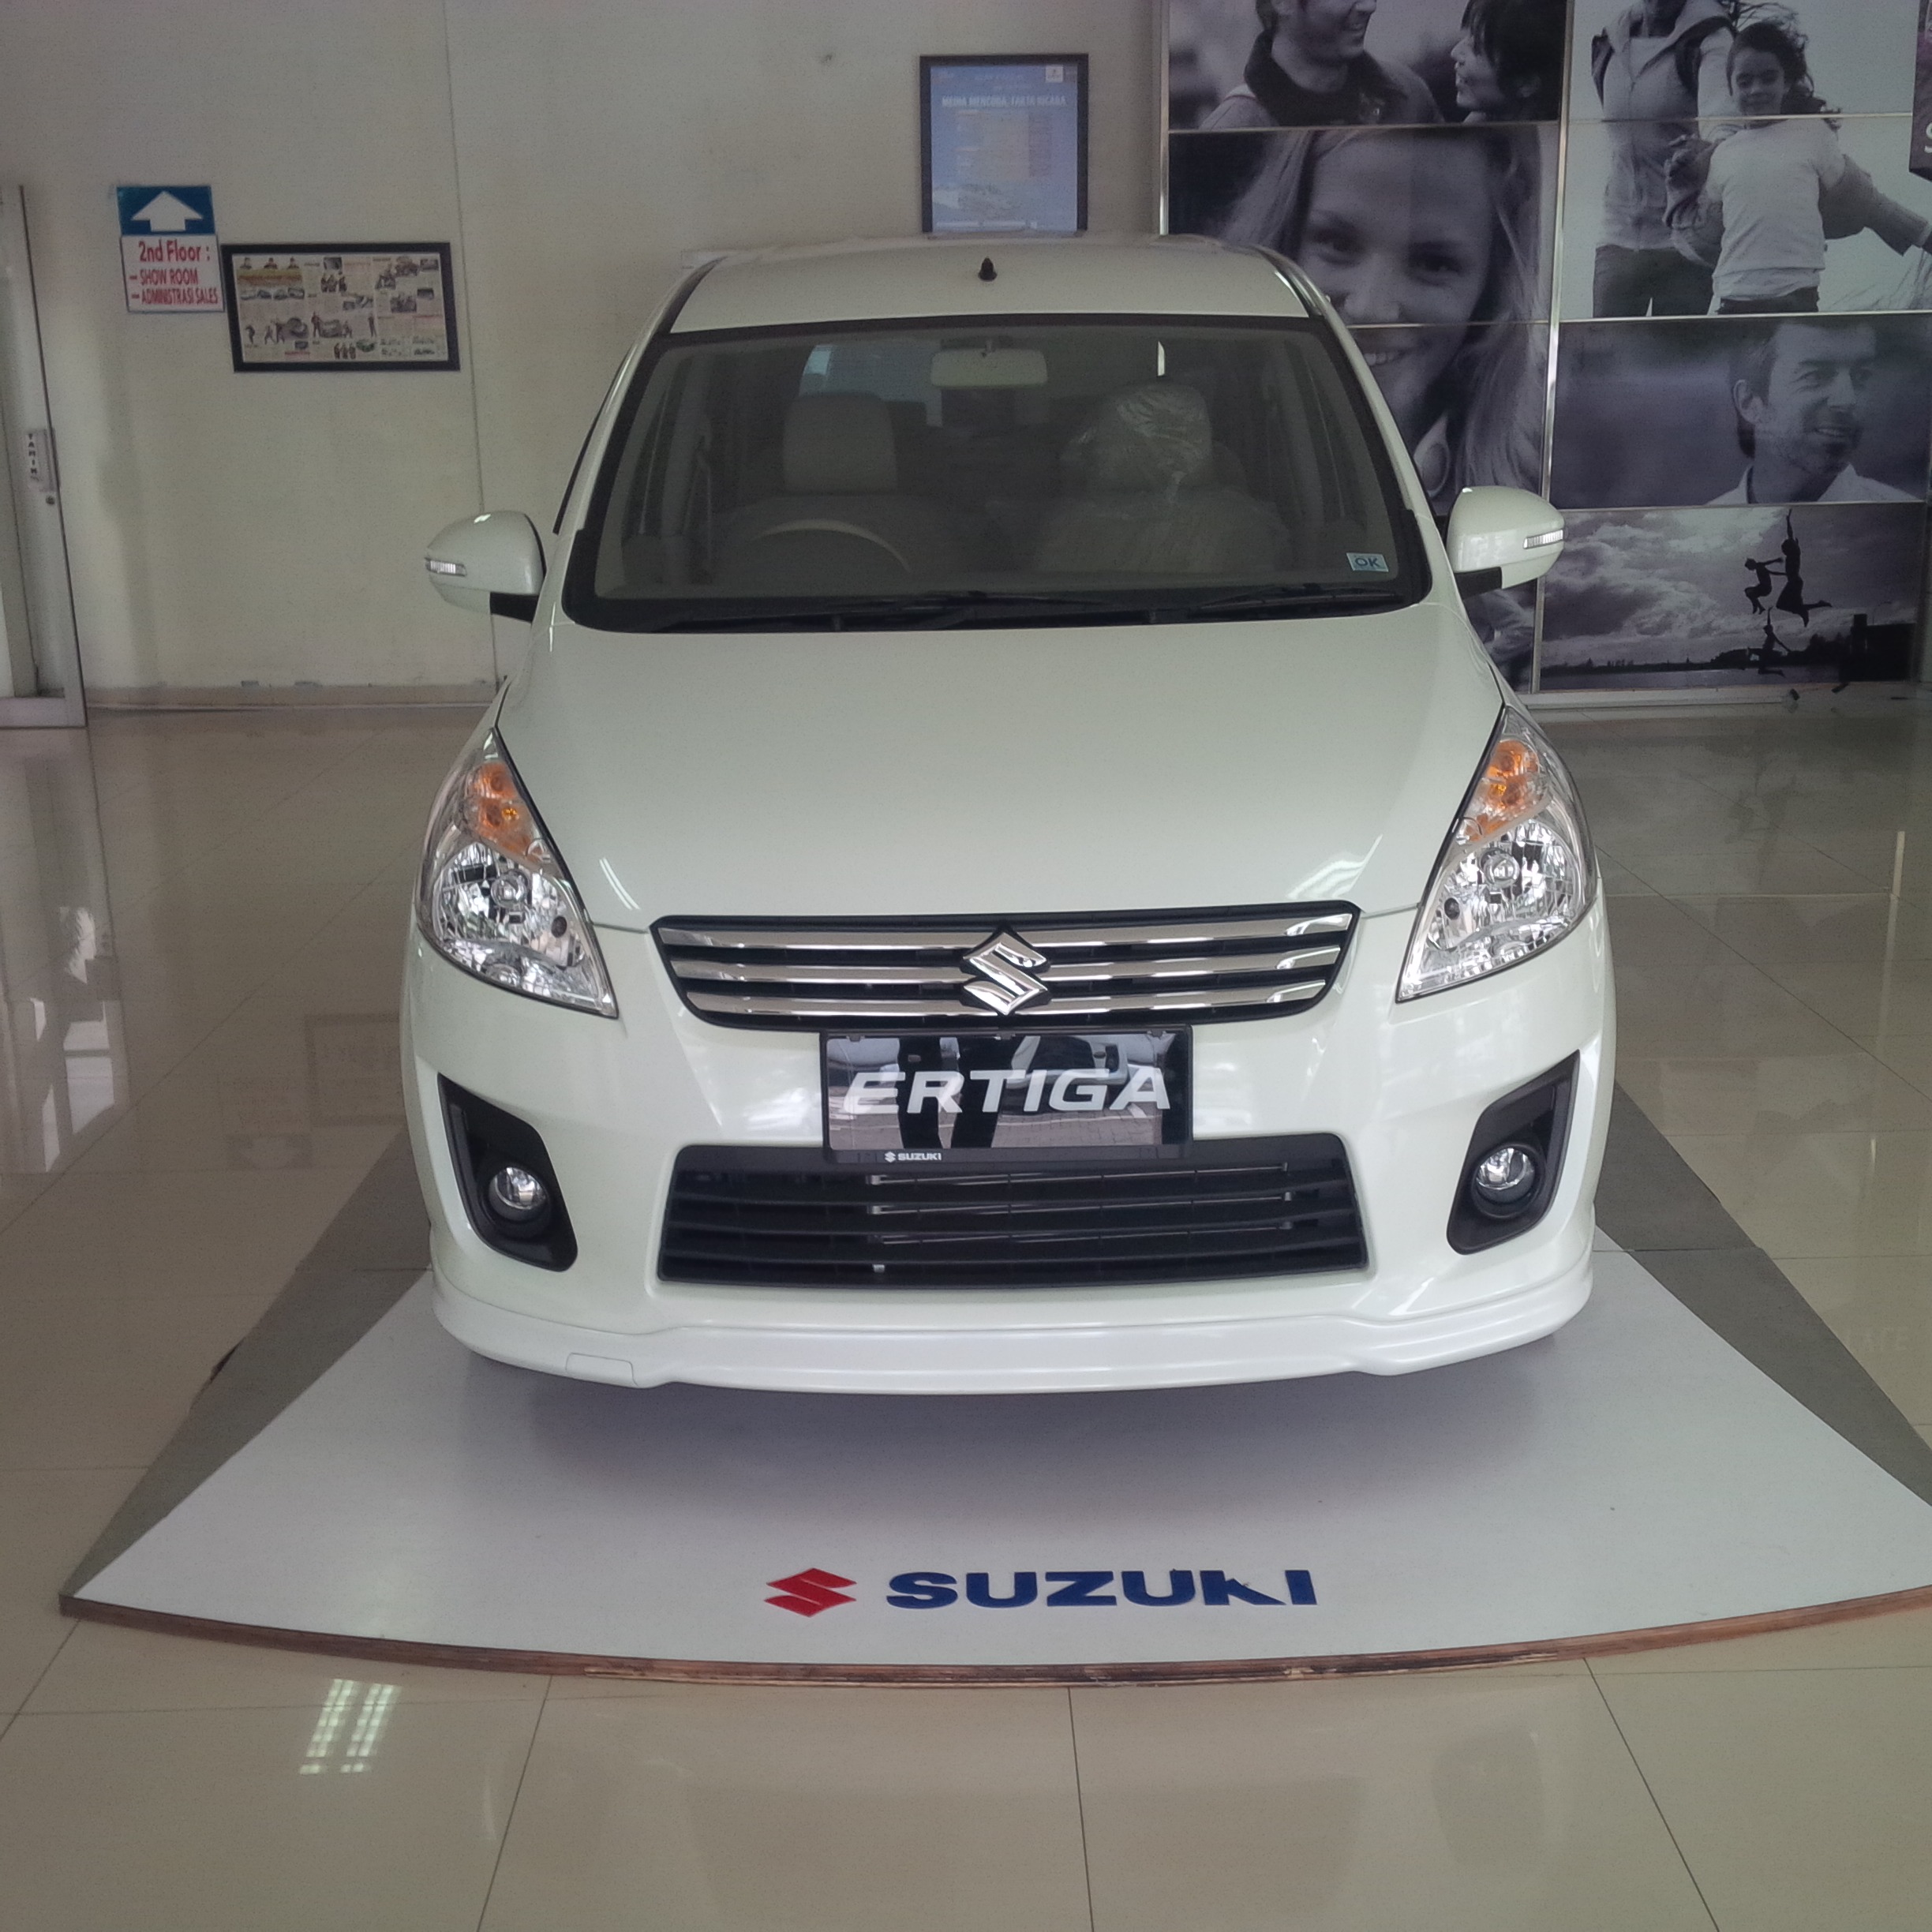 Suzuki Ertiga hd 2015